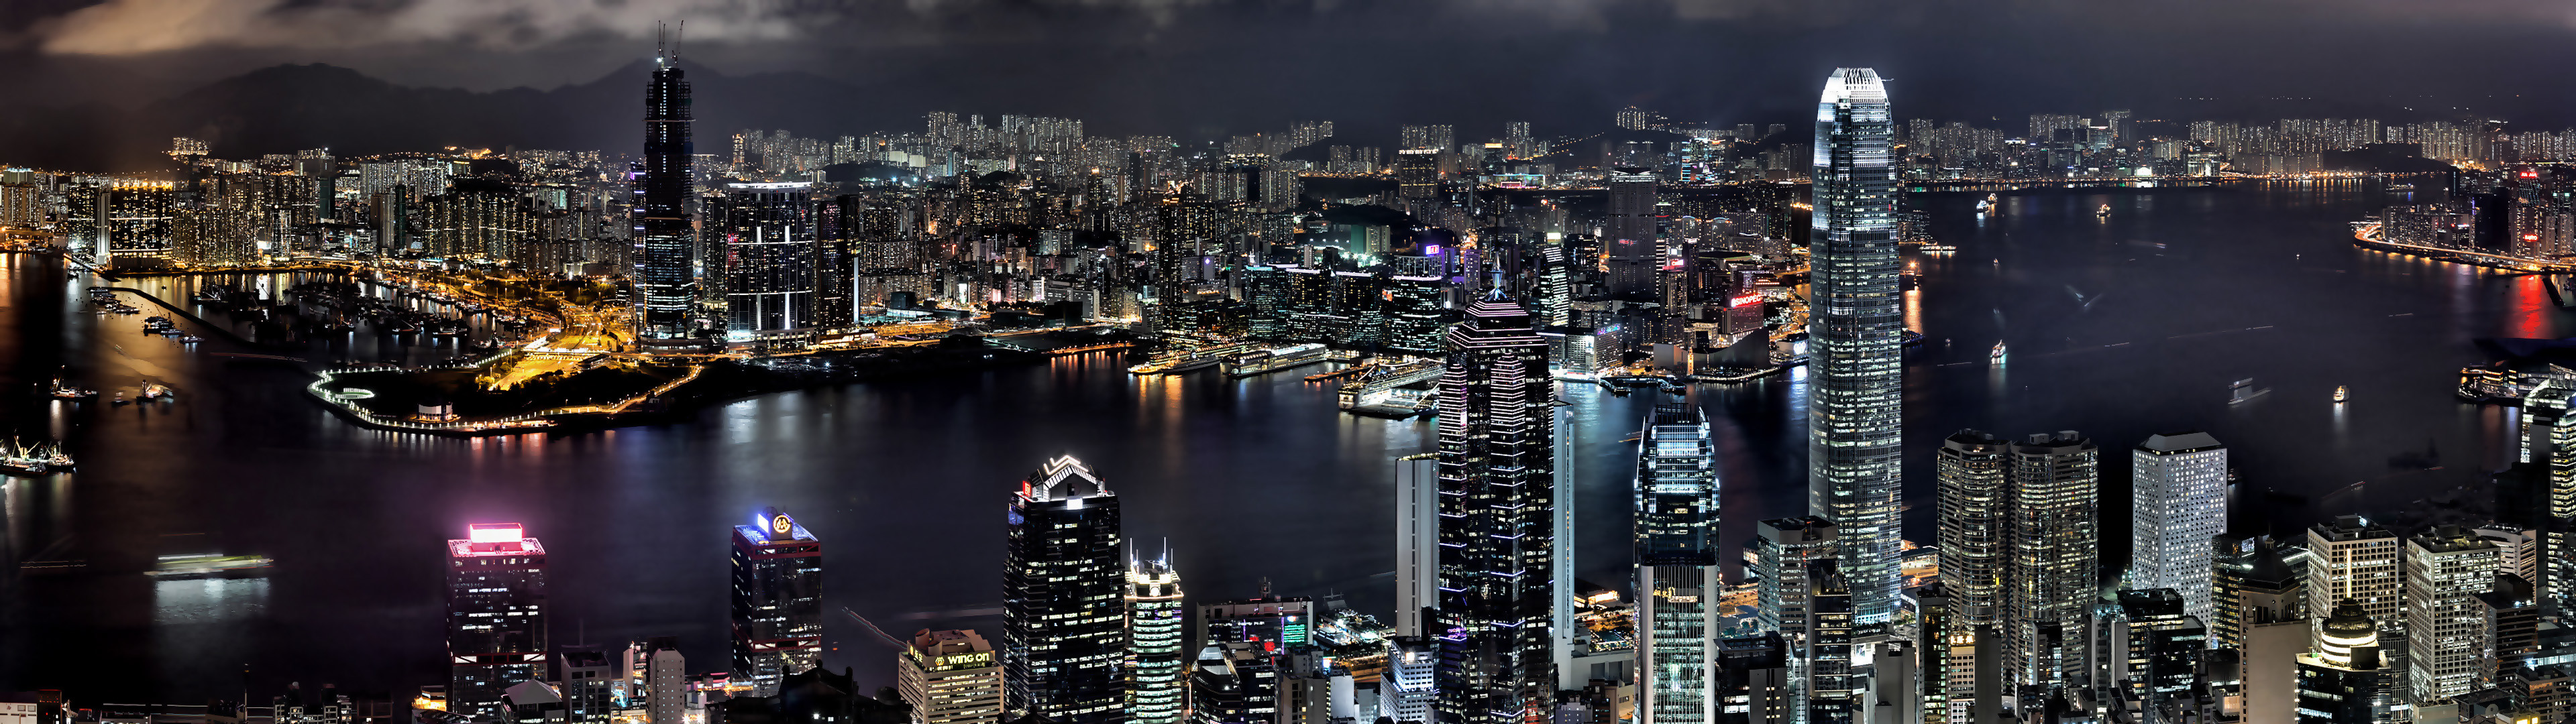 3840x1080 Cityscapes night buildings Hong Kong wallpaper |  | 61374 |  WallpaperUP